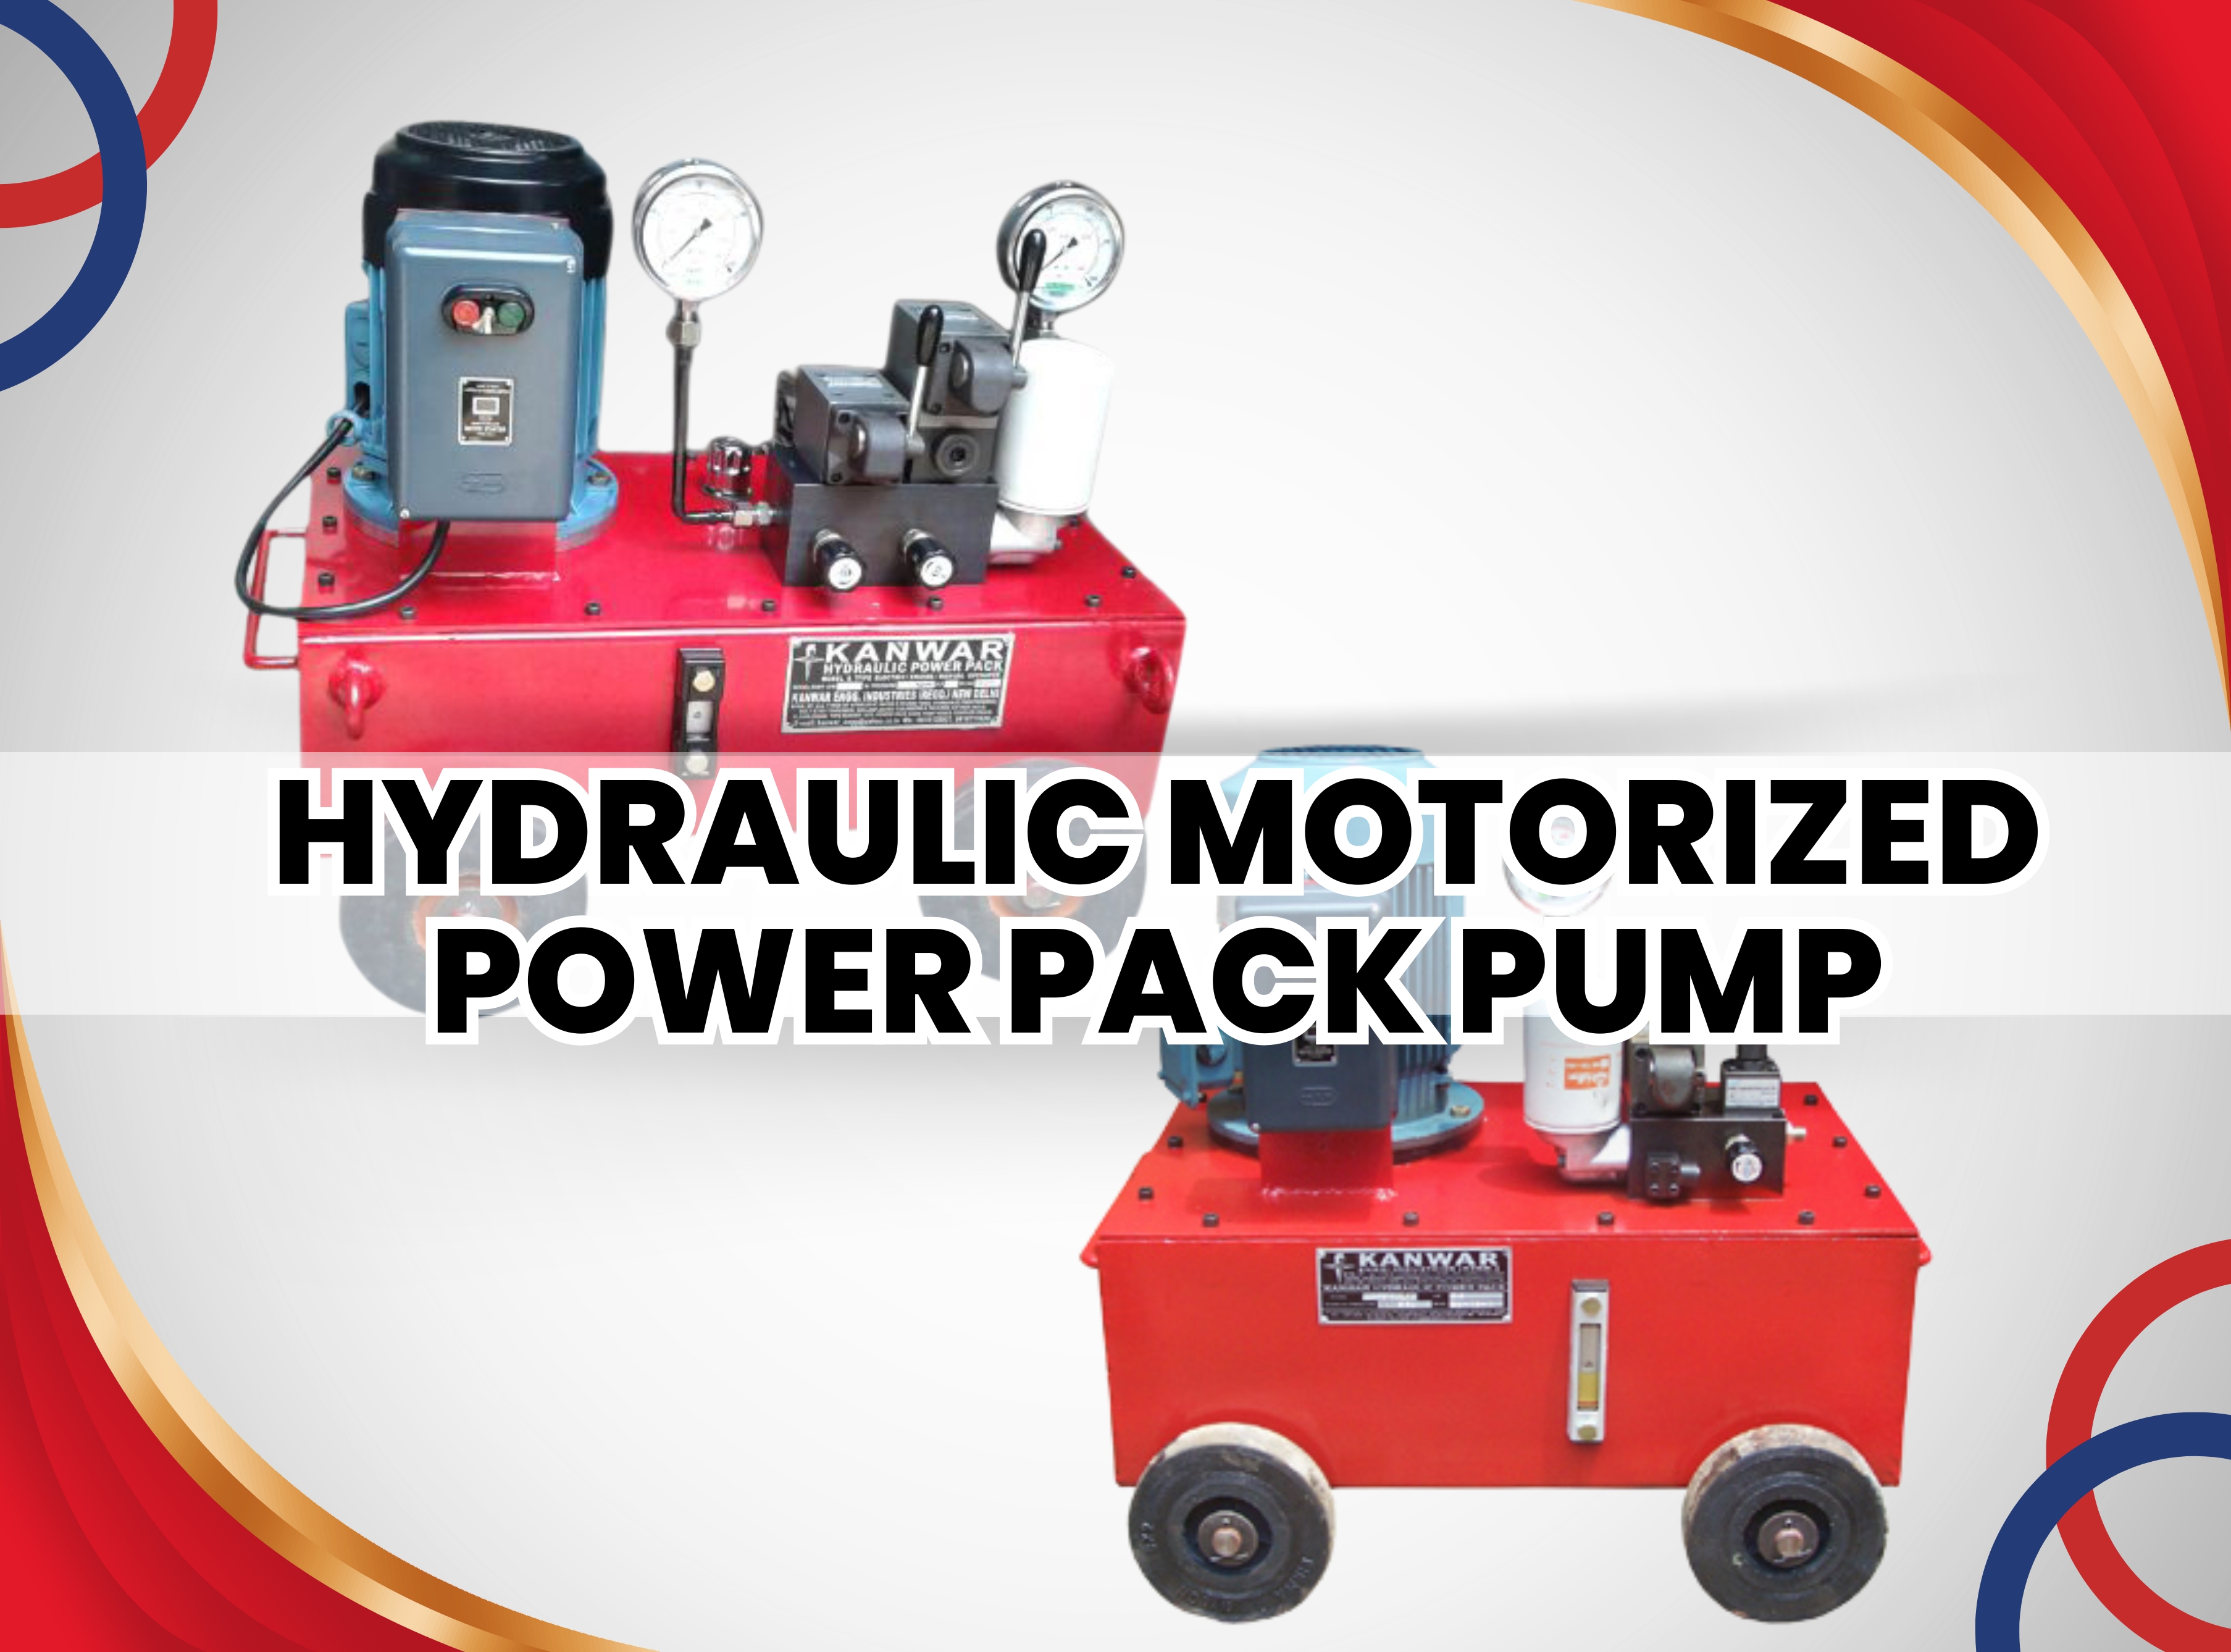 Hydraulic Motorized Power Pack Pump